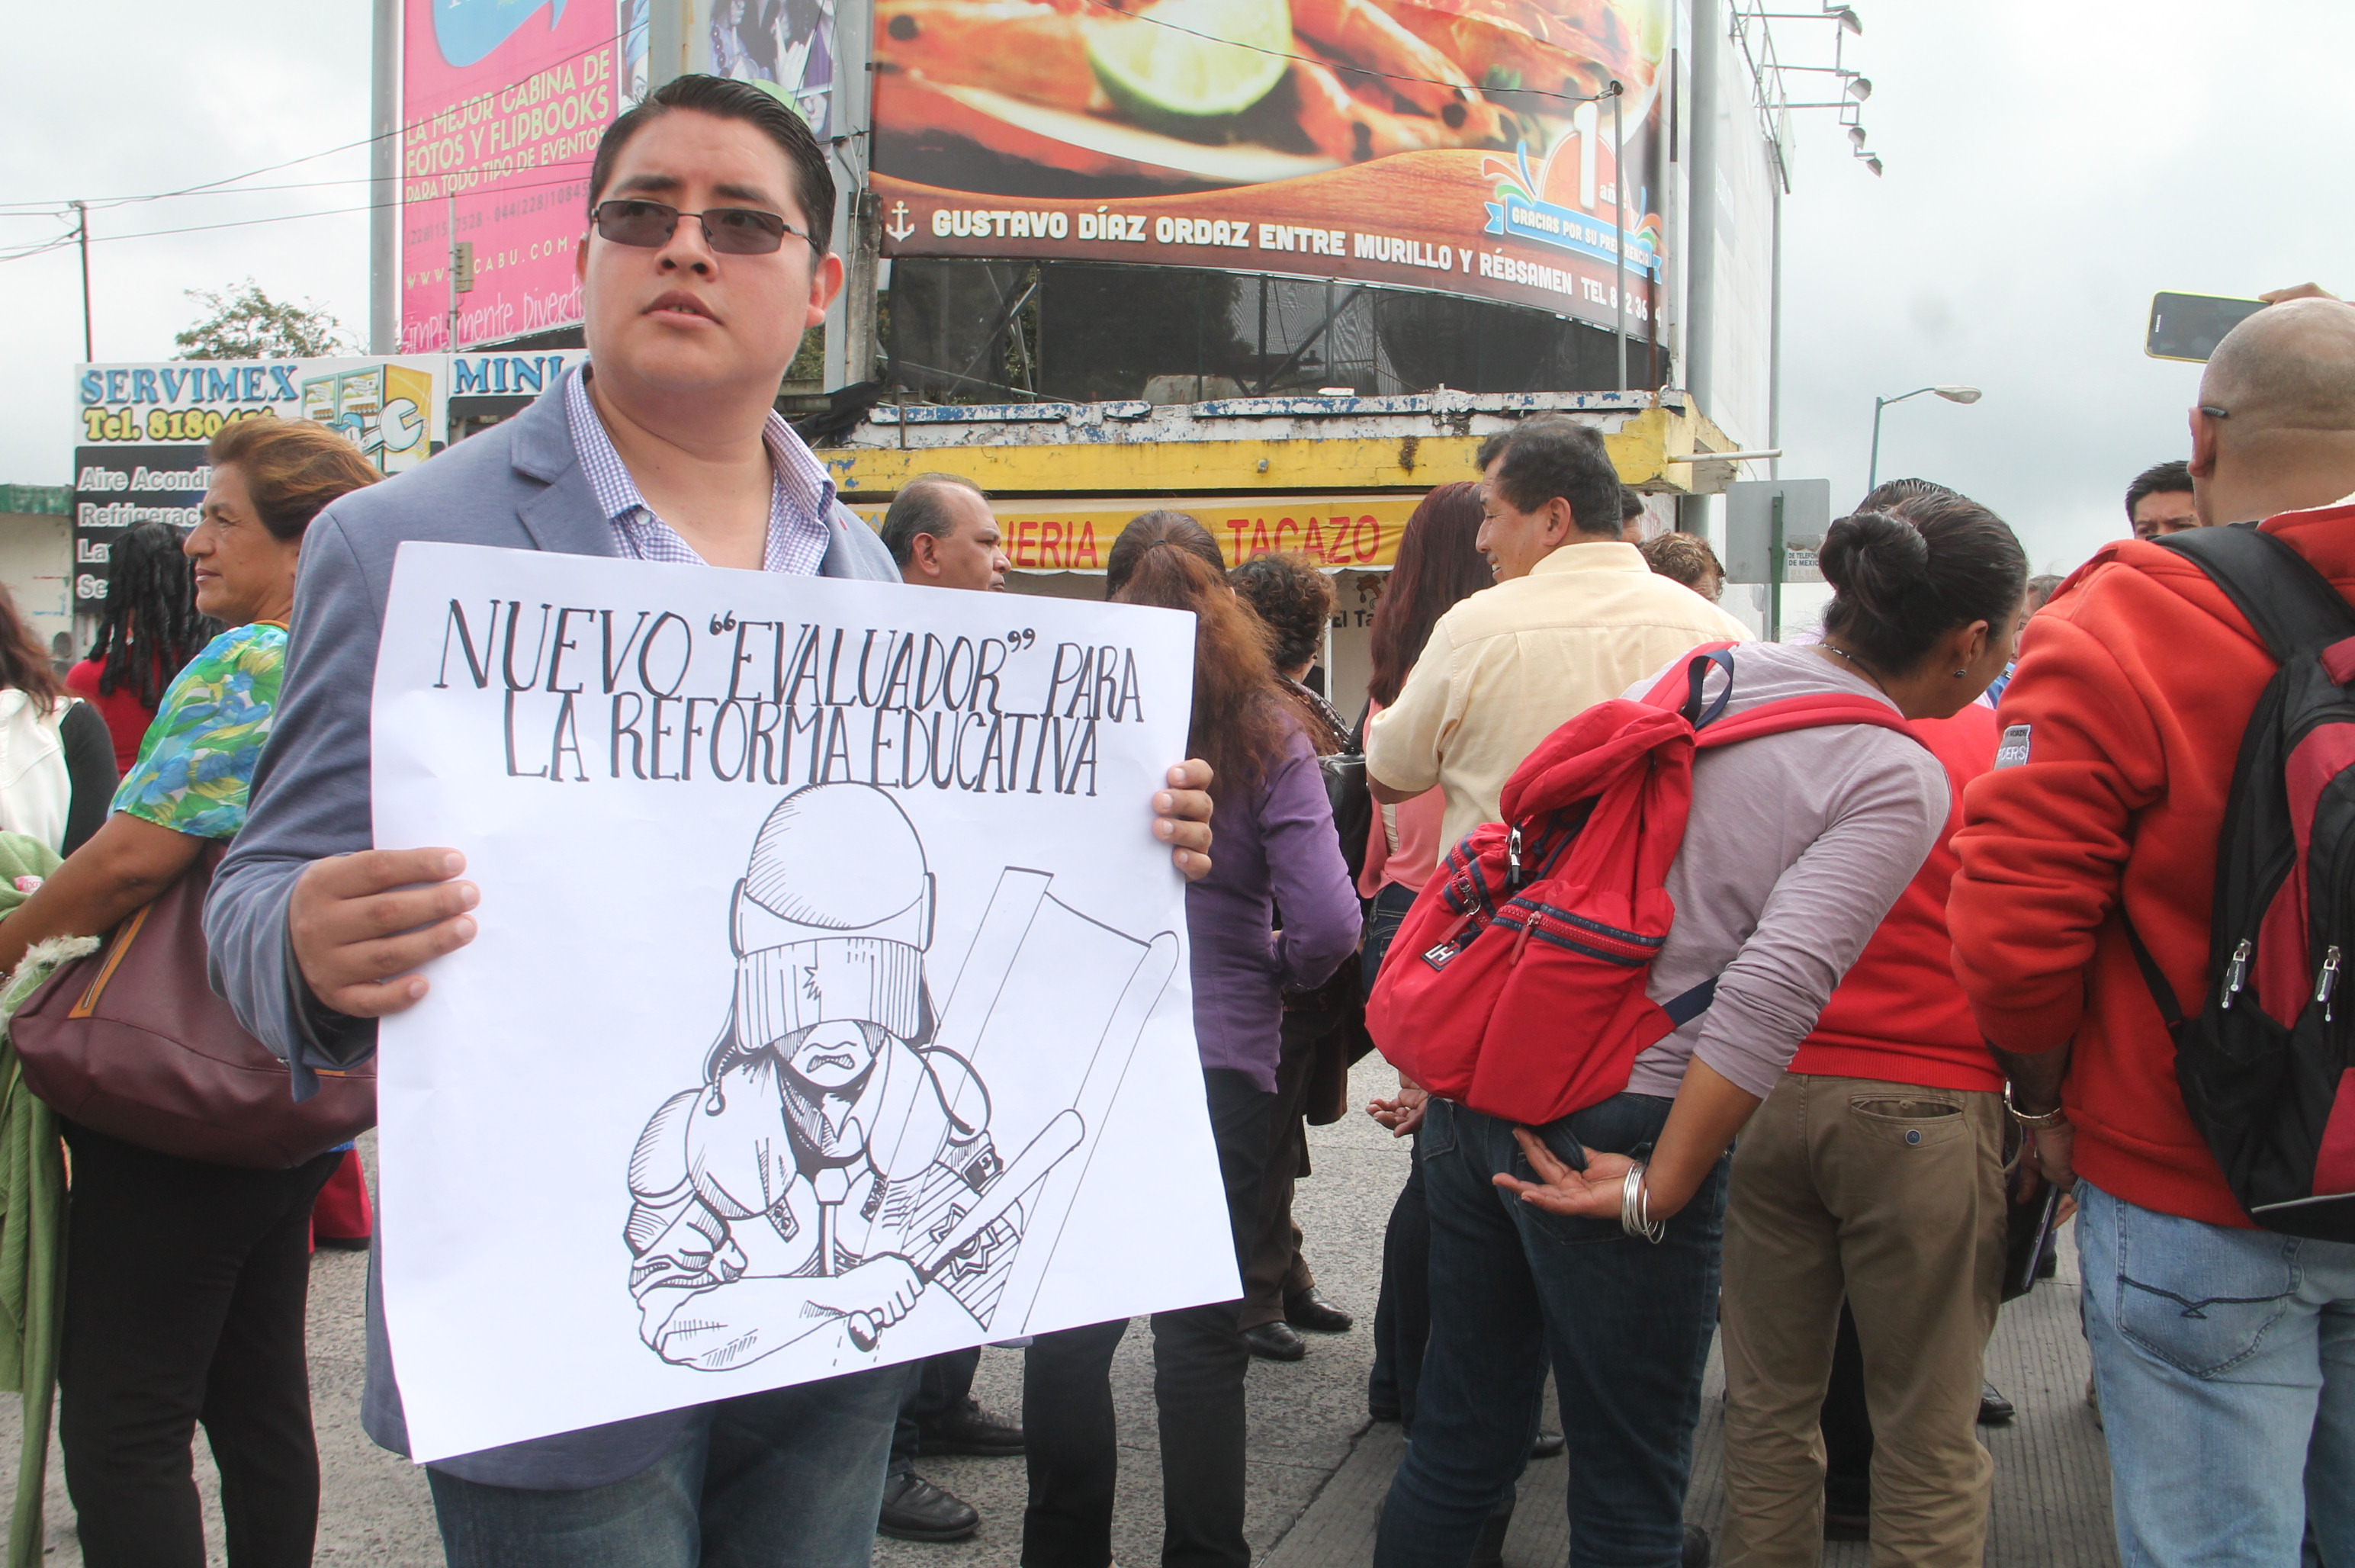  Urge Comisión Nacional de Seguridad a crear ley sobre uso de fuerza pública en México